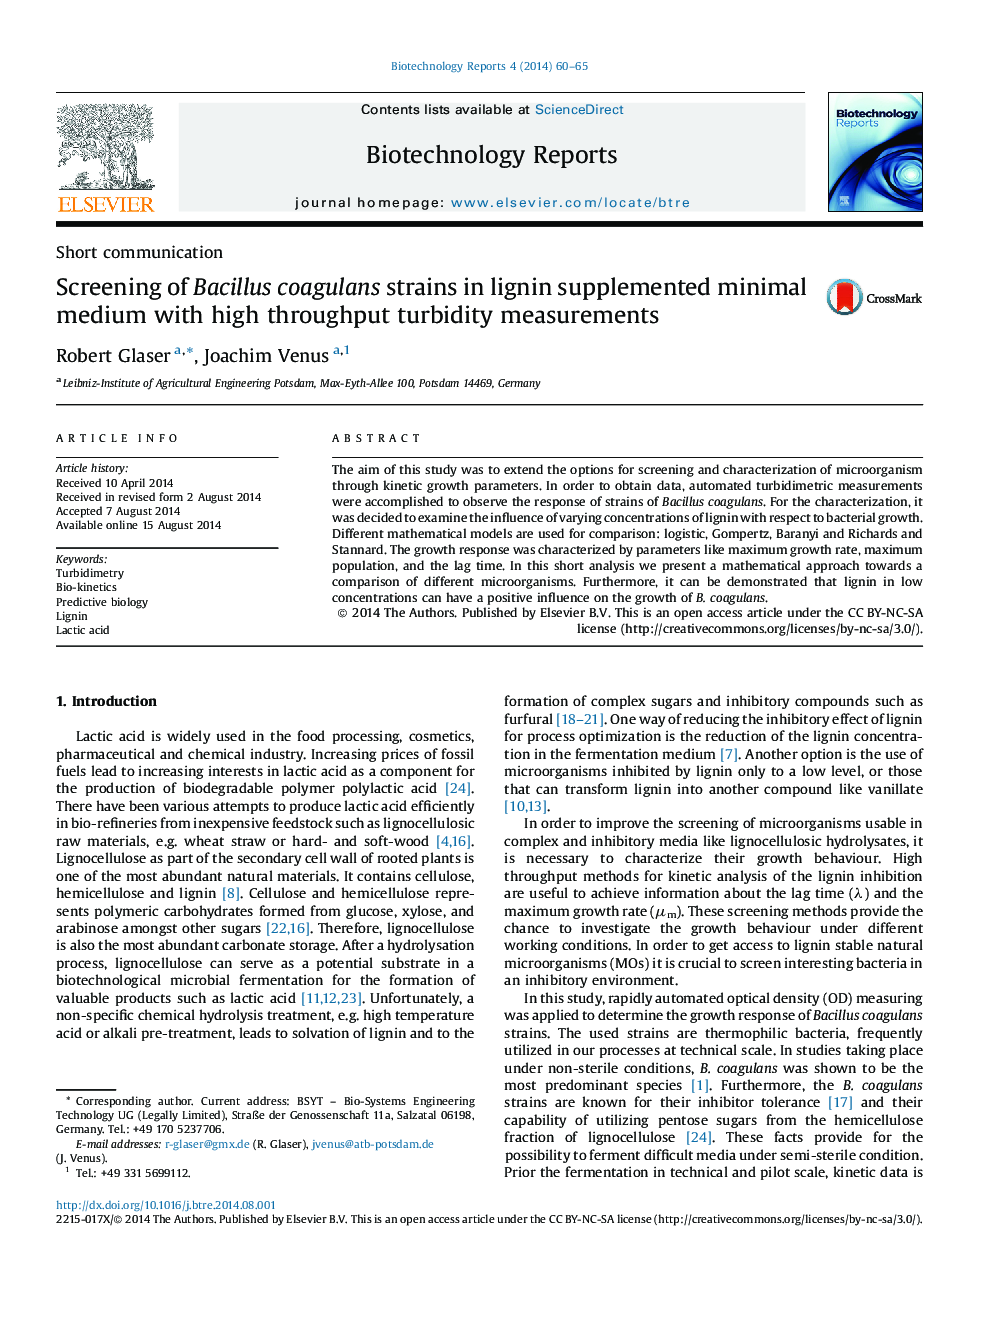 Screening of Bacillus coagulans strains in lignin supplemented minimal medium with high throughput turbidity measurements